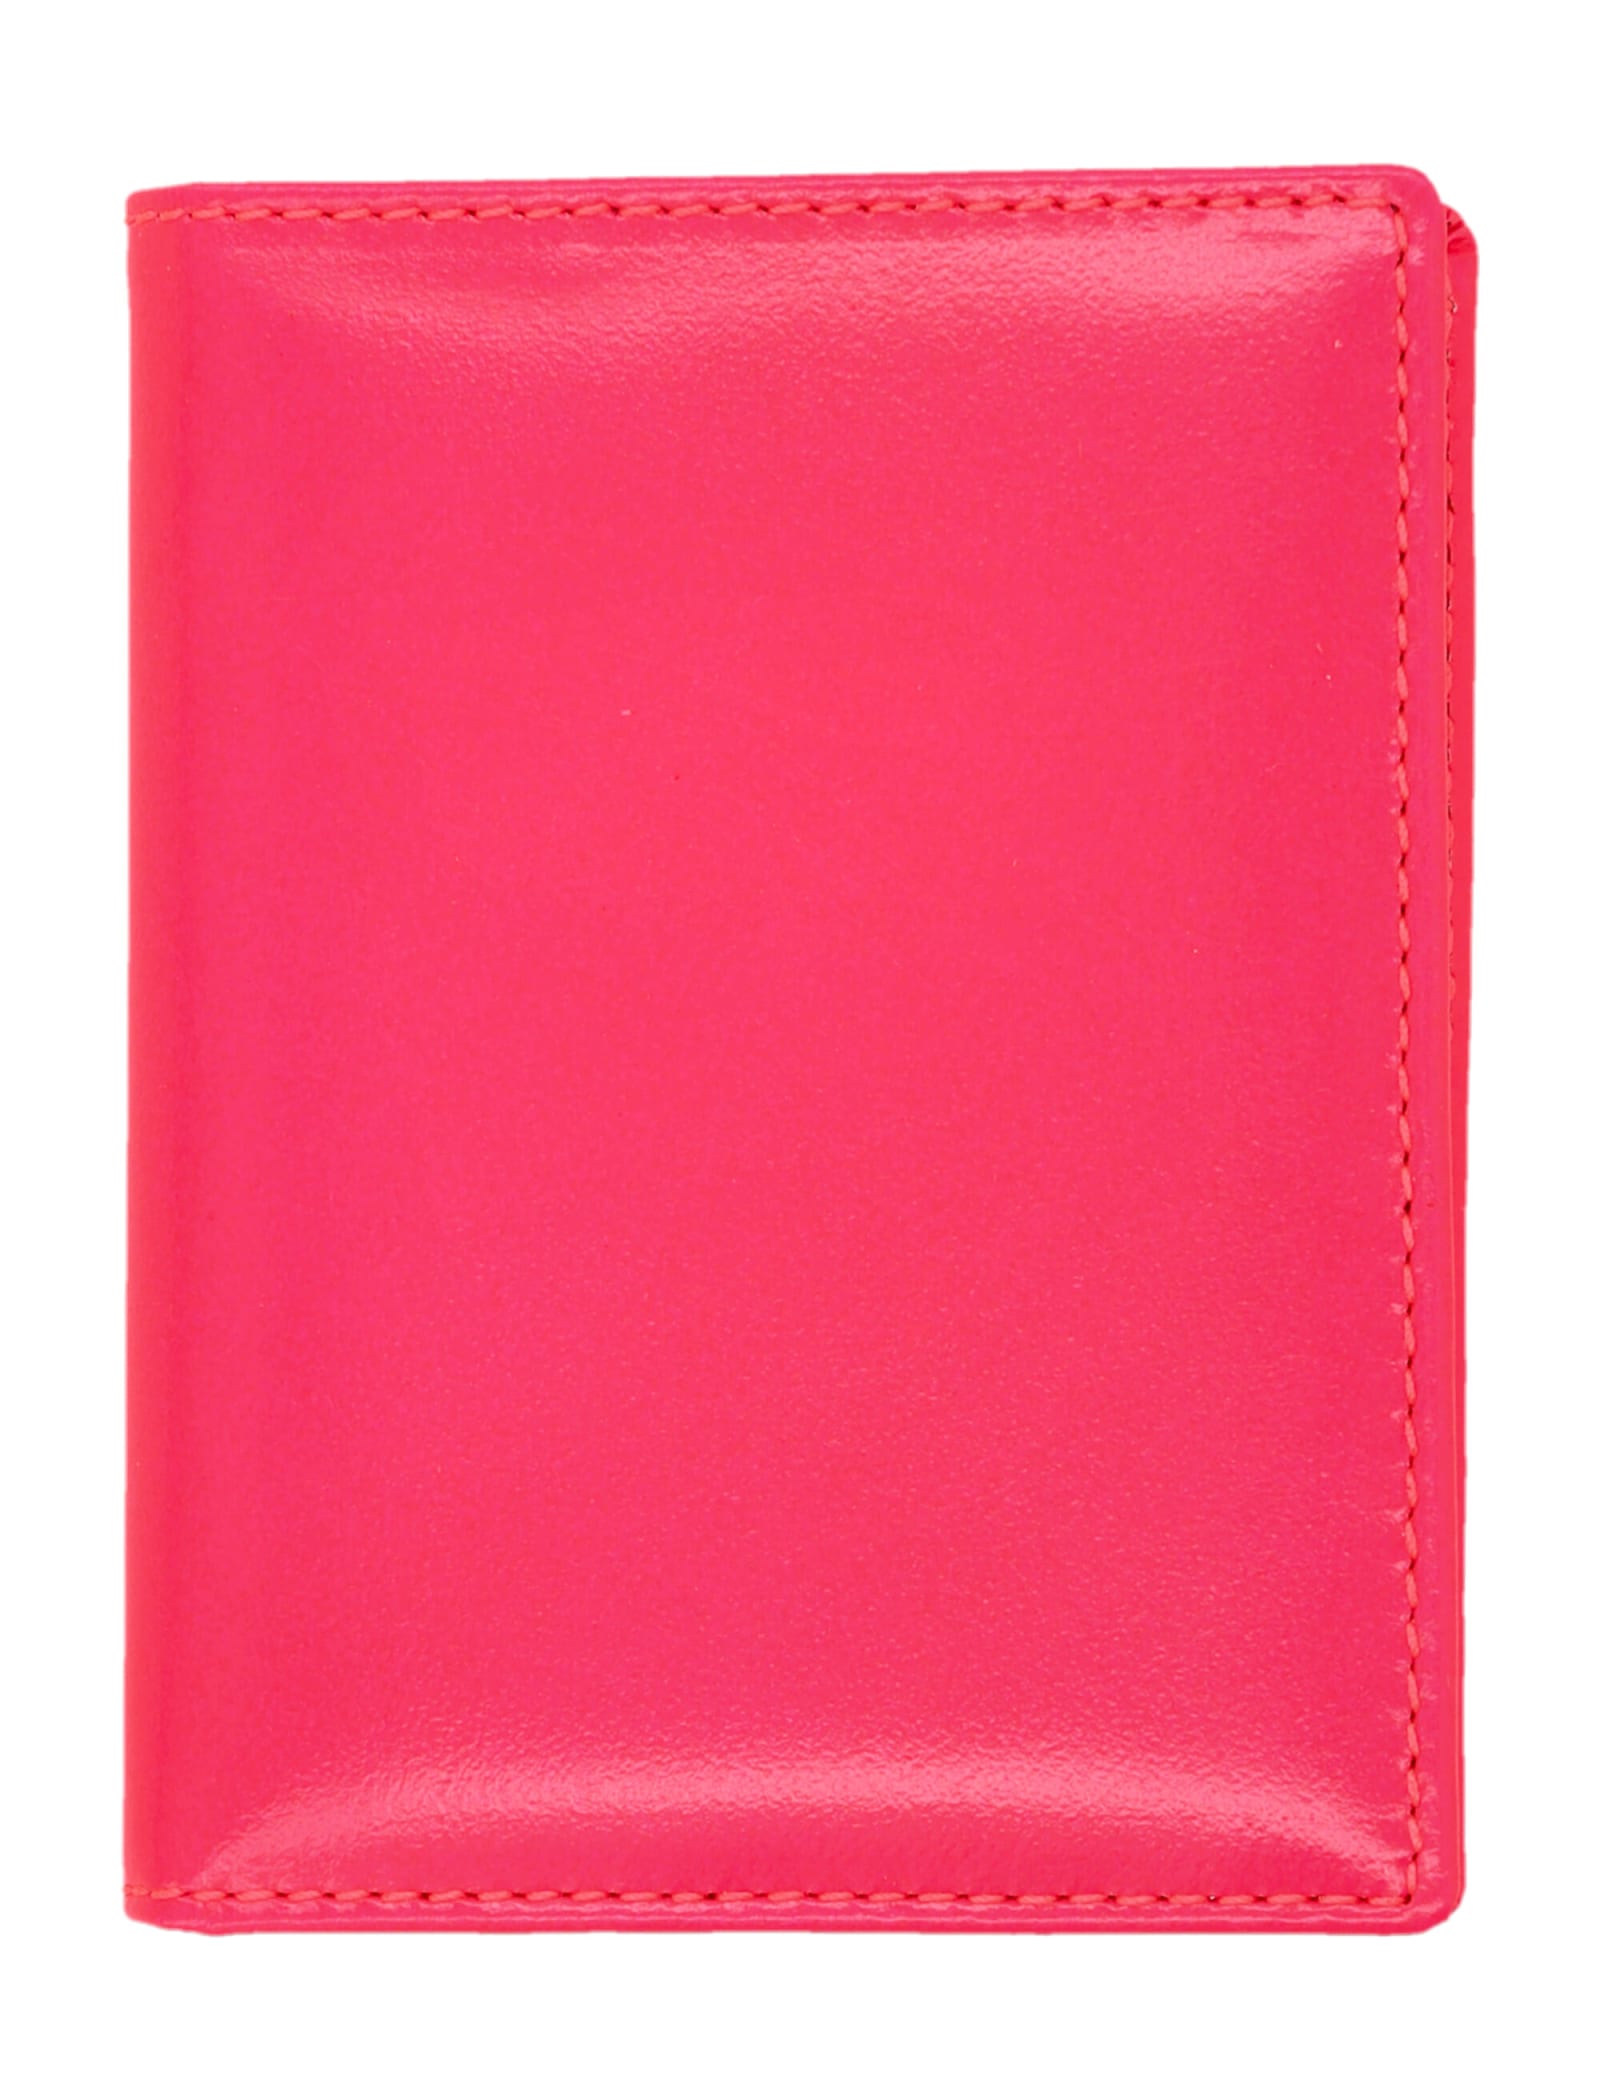 Comme Des Garçons Super Fluo Cardholder In Pink/yellow